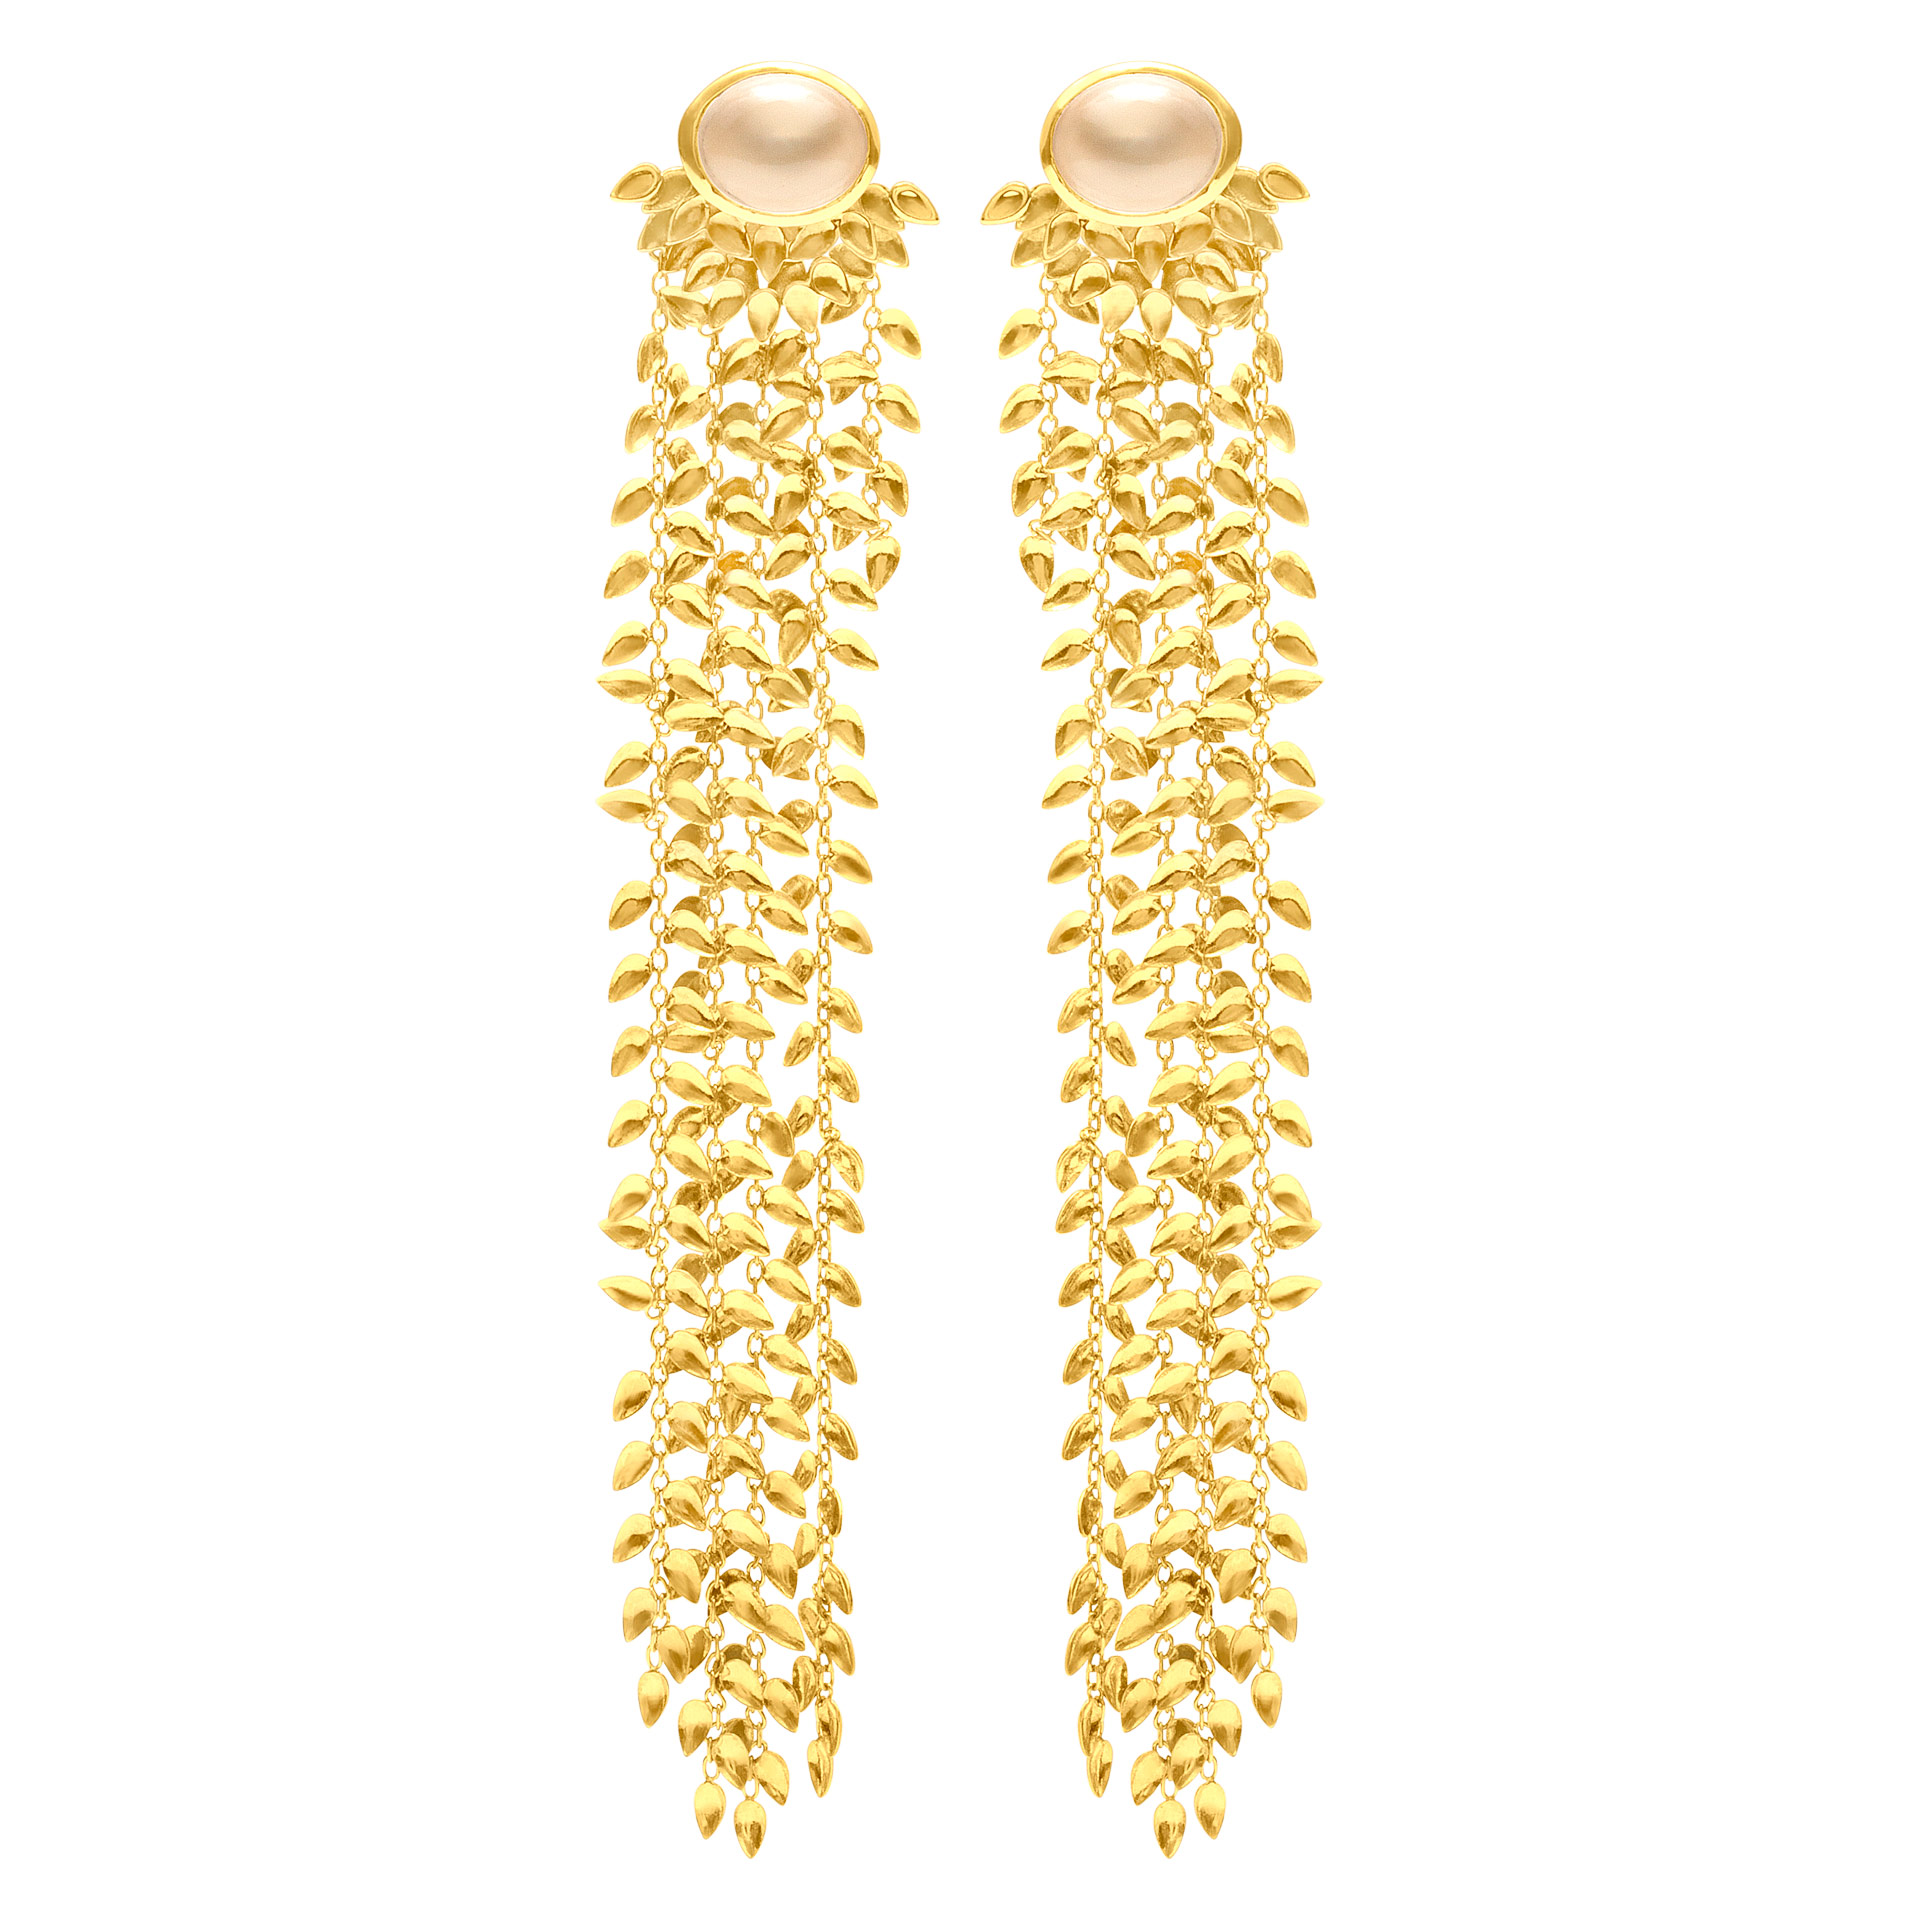 Dandling earrings in 18k yellow gold with moonstones image 1